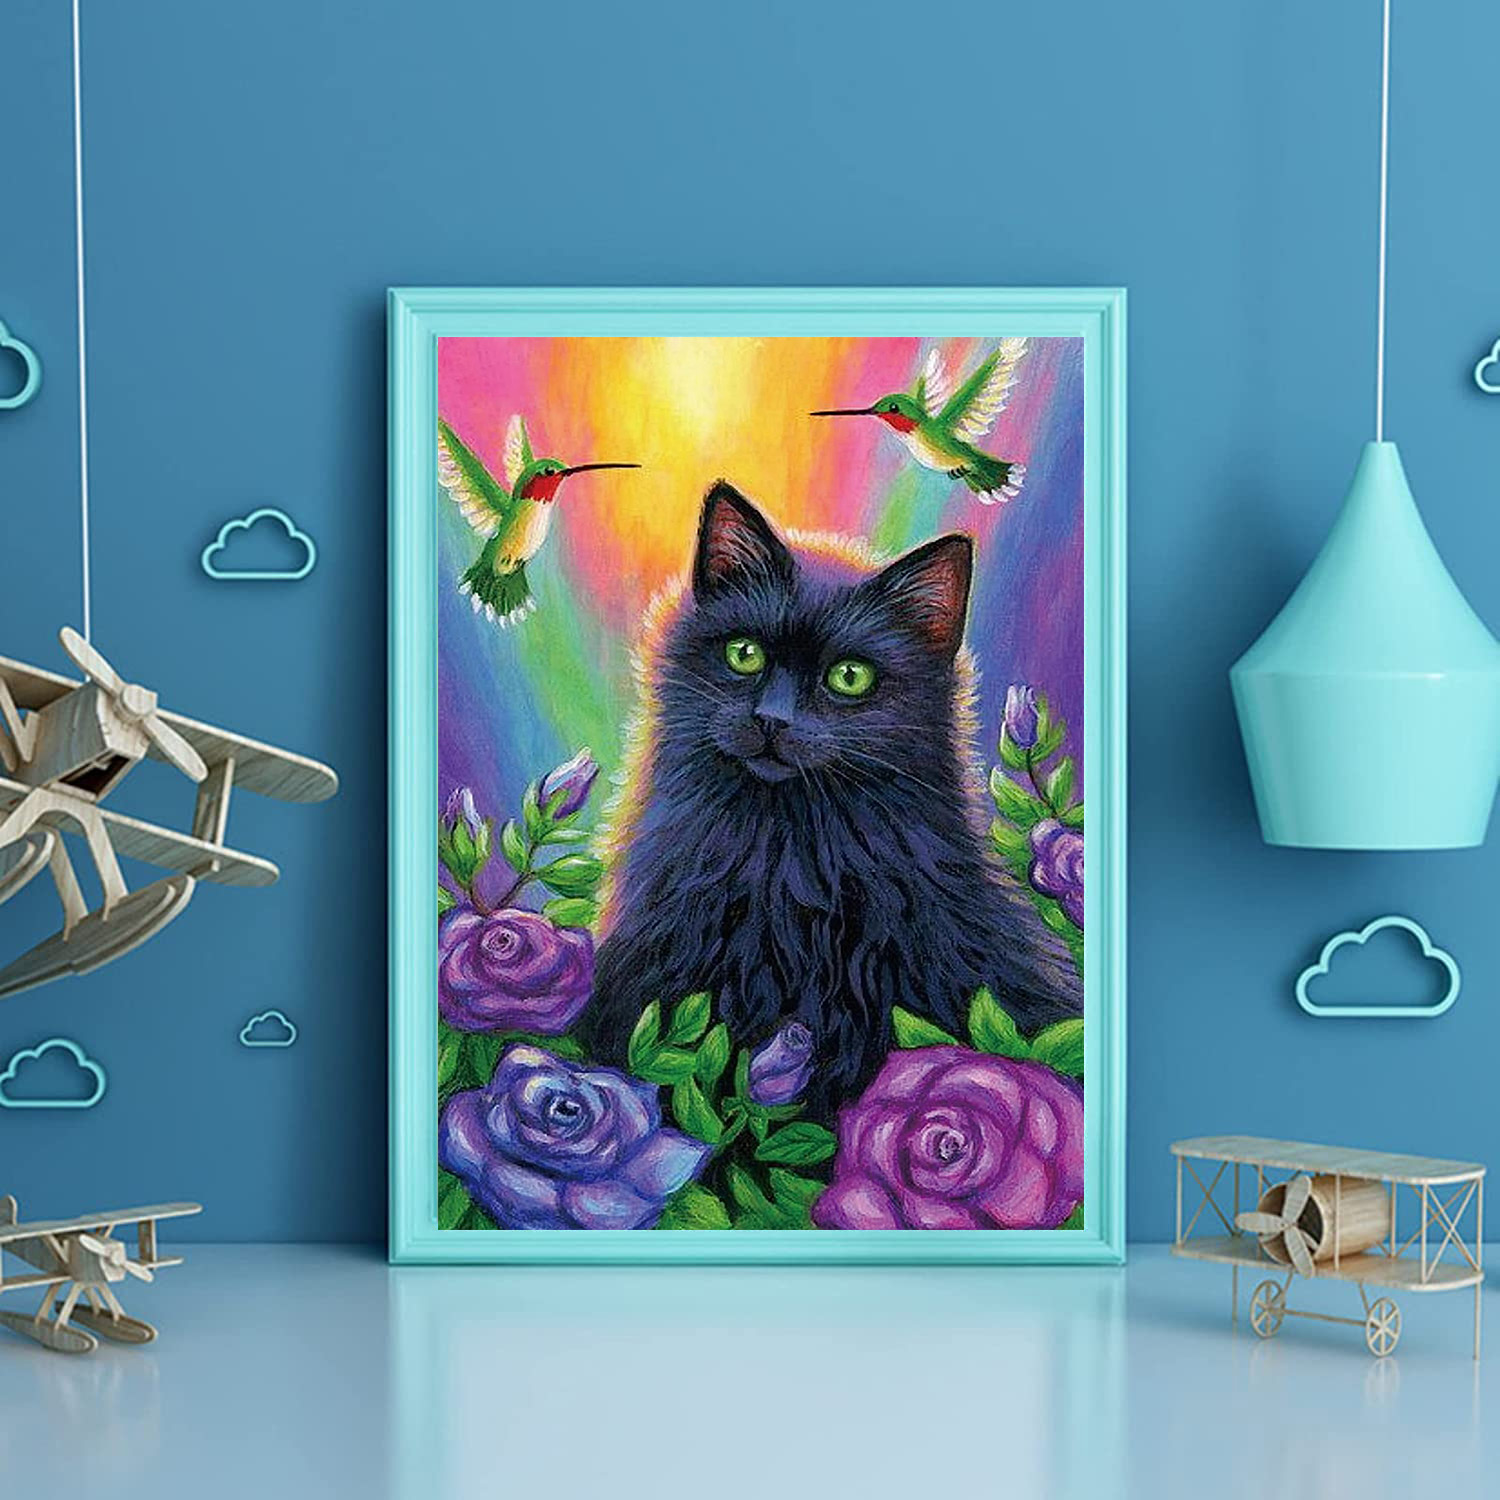 DIY 5D Diamond Painting Kits, Black Cat Diamond Painting Full Diamond Art Kits for Adults Cat Crystal Rhinestone Embroidery Cross Stitch Arts Craft